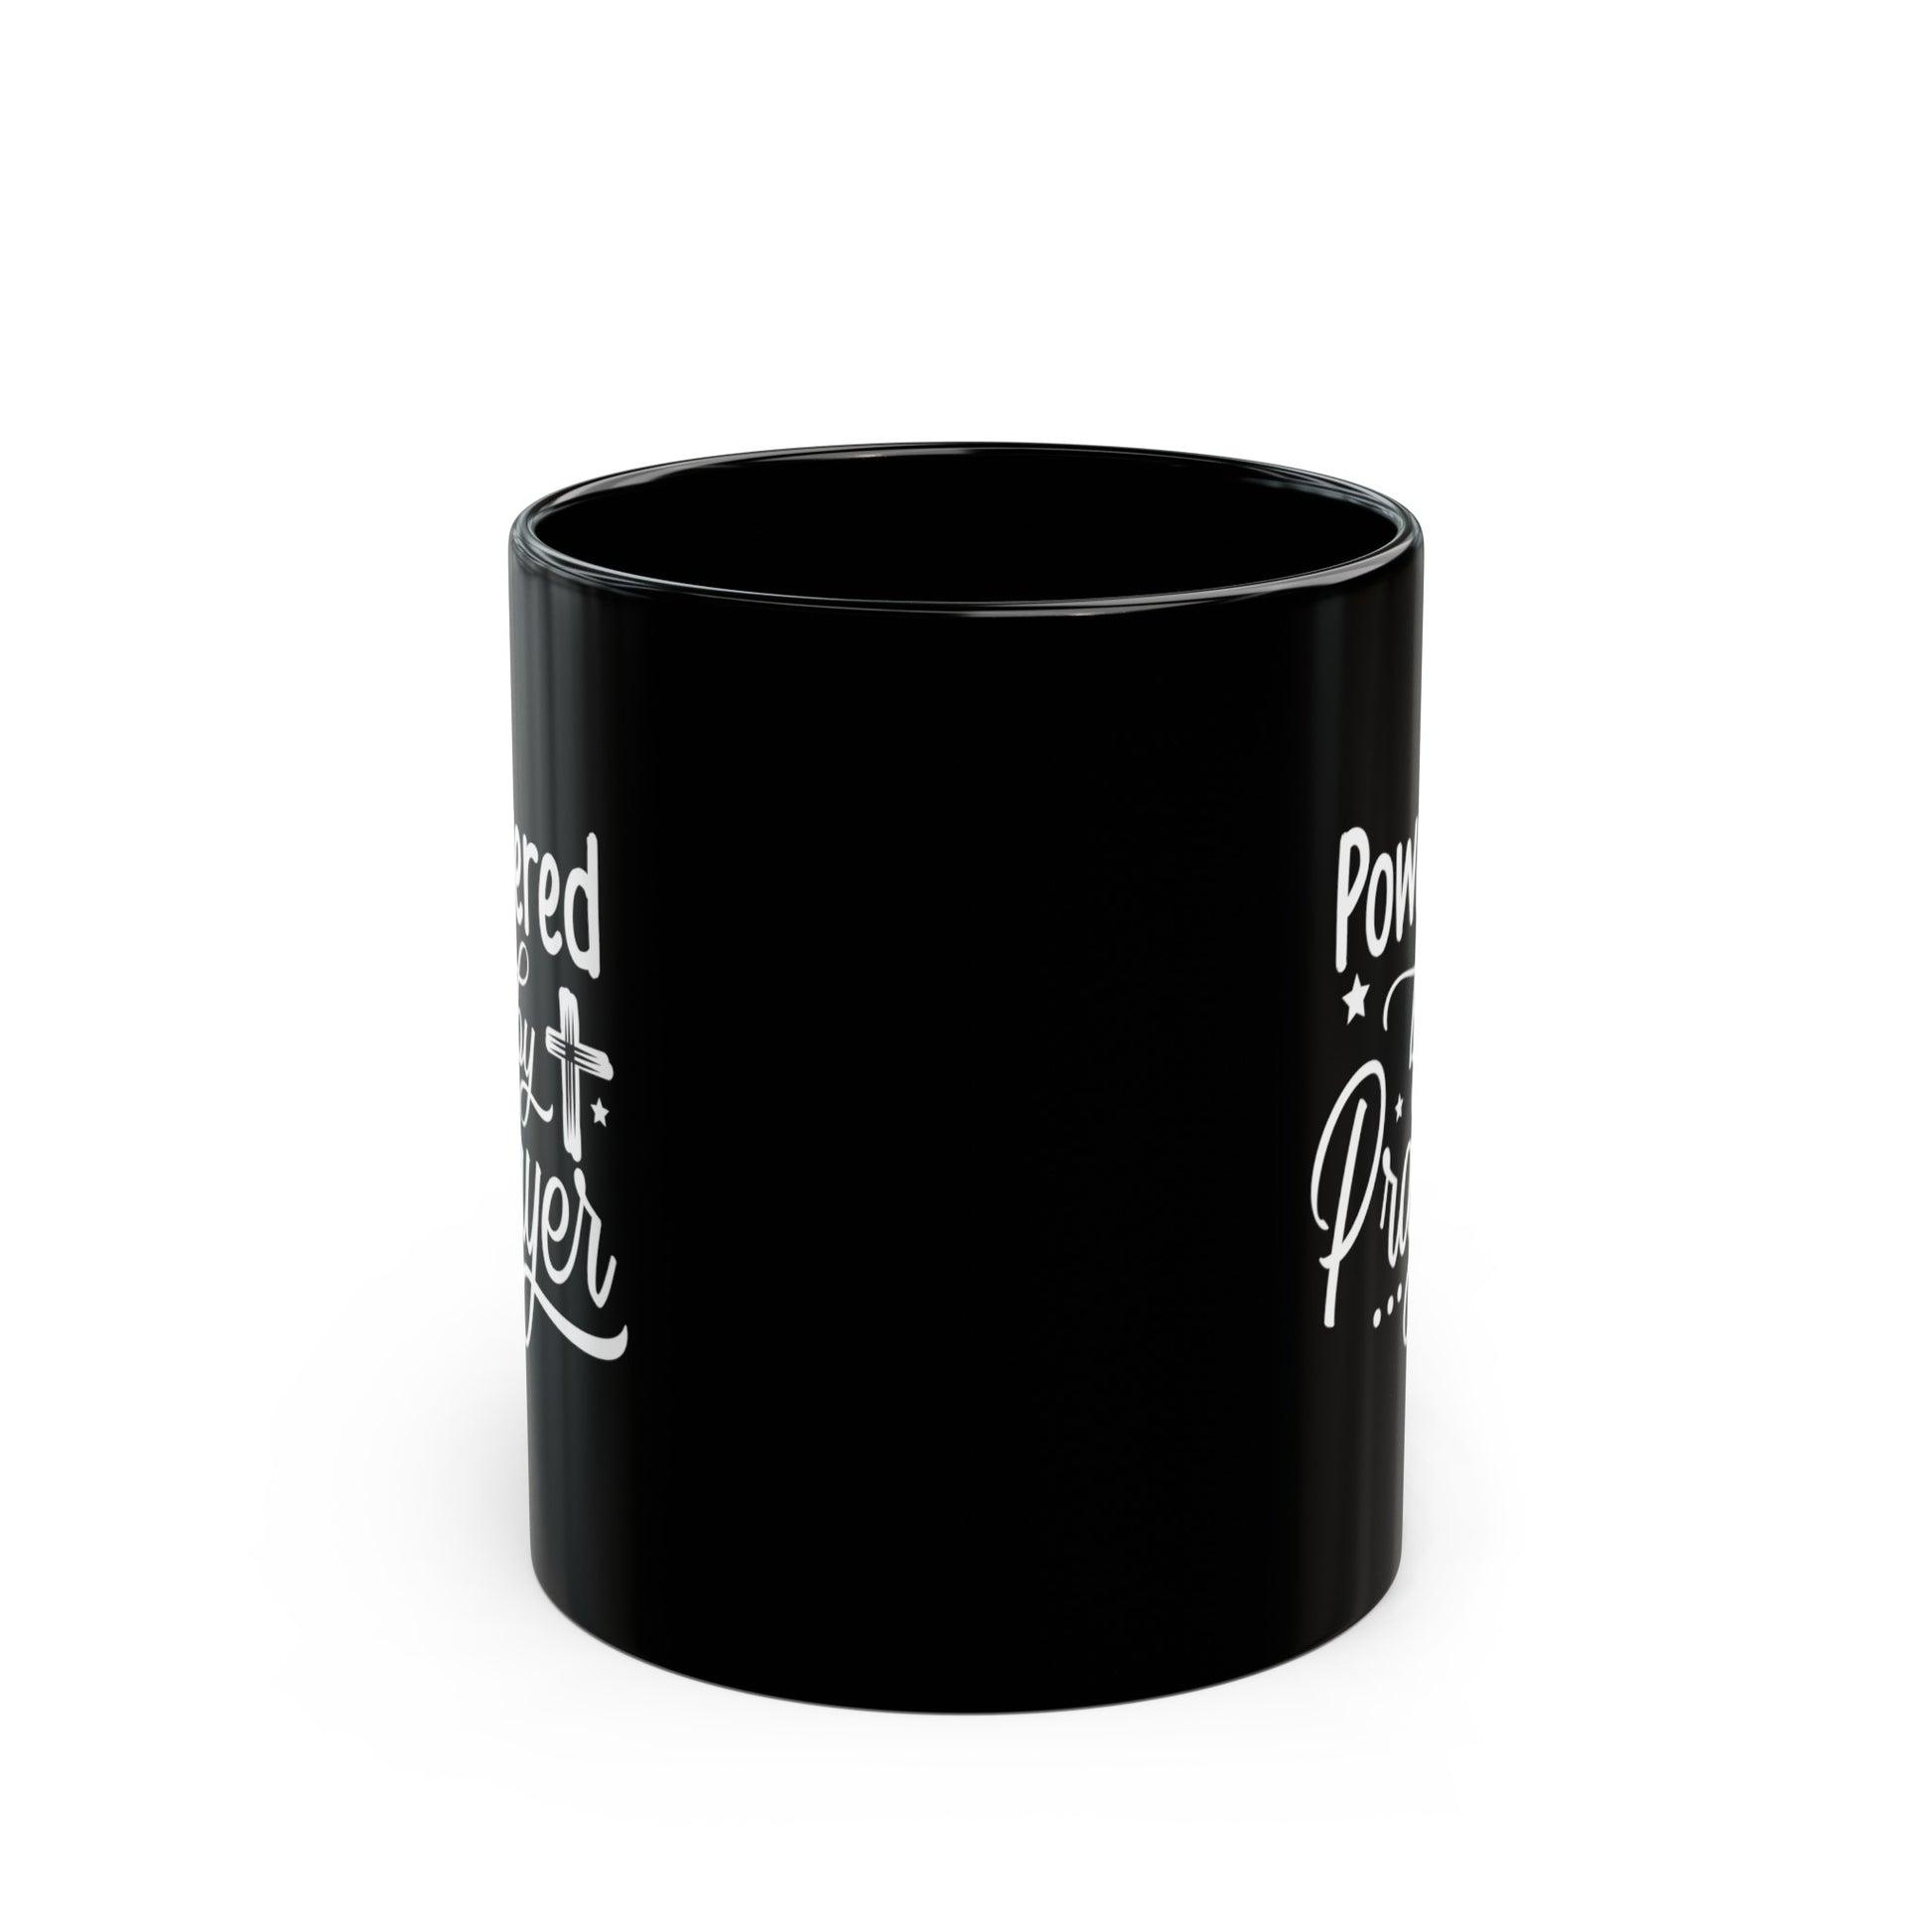 Powered By Prayer Christian Black Ceramic Mug 11oz (double sided print) Printify